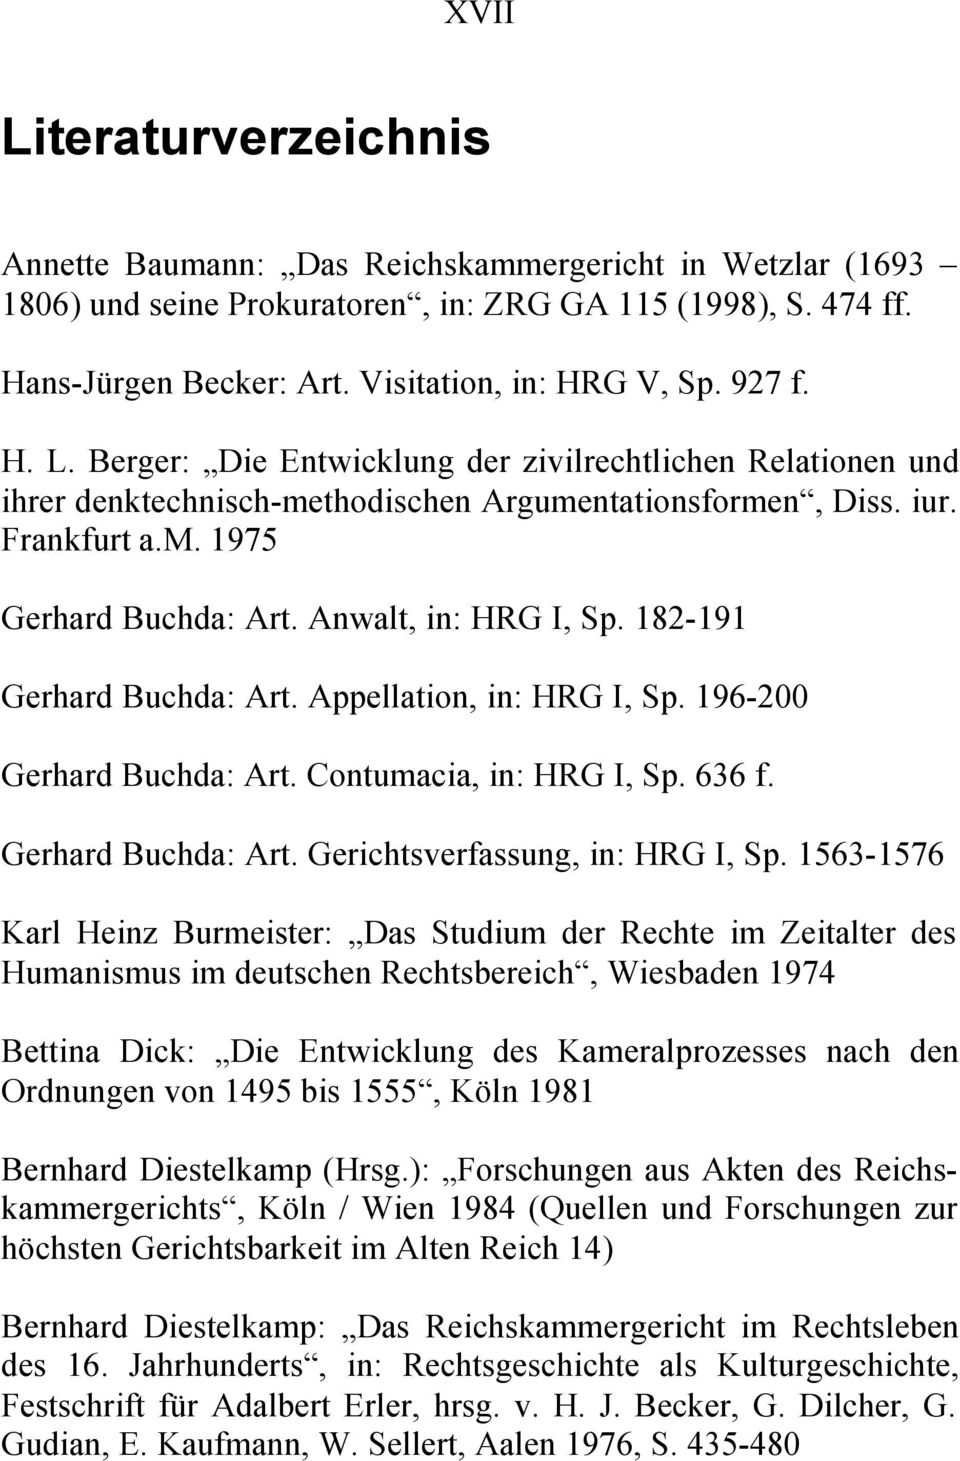 Anwalt, in: HRG I, Sp. 182-191 Gerhard Buchda: Art. Appellation, in: HRG I, Sp. 196-200 Gerhard Buchda: Art. Contumacia, in: HRG I, Sp. 636 f. Gerhard Buchda: Art. Gerichtsverfassung, in: HRG I, Sp.